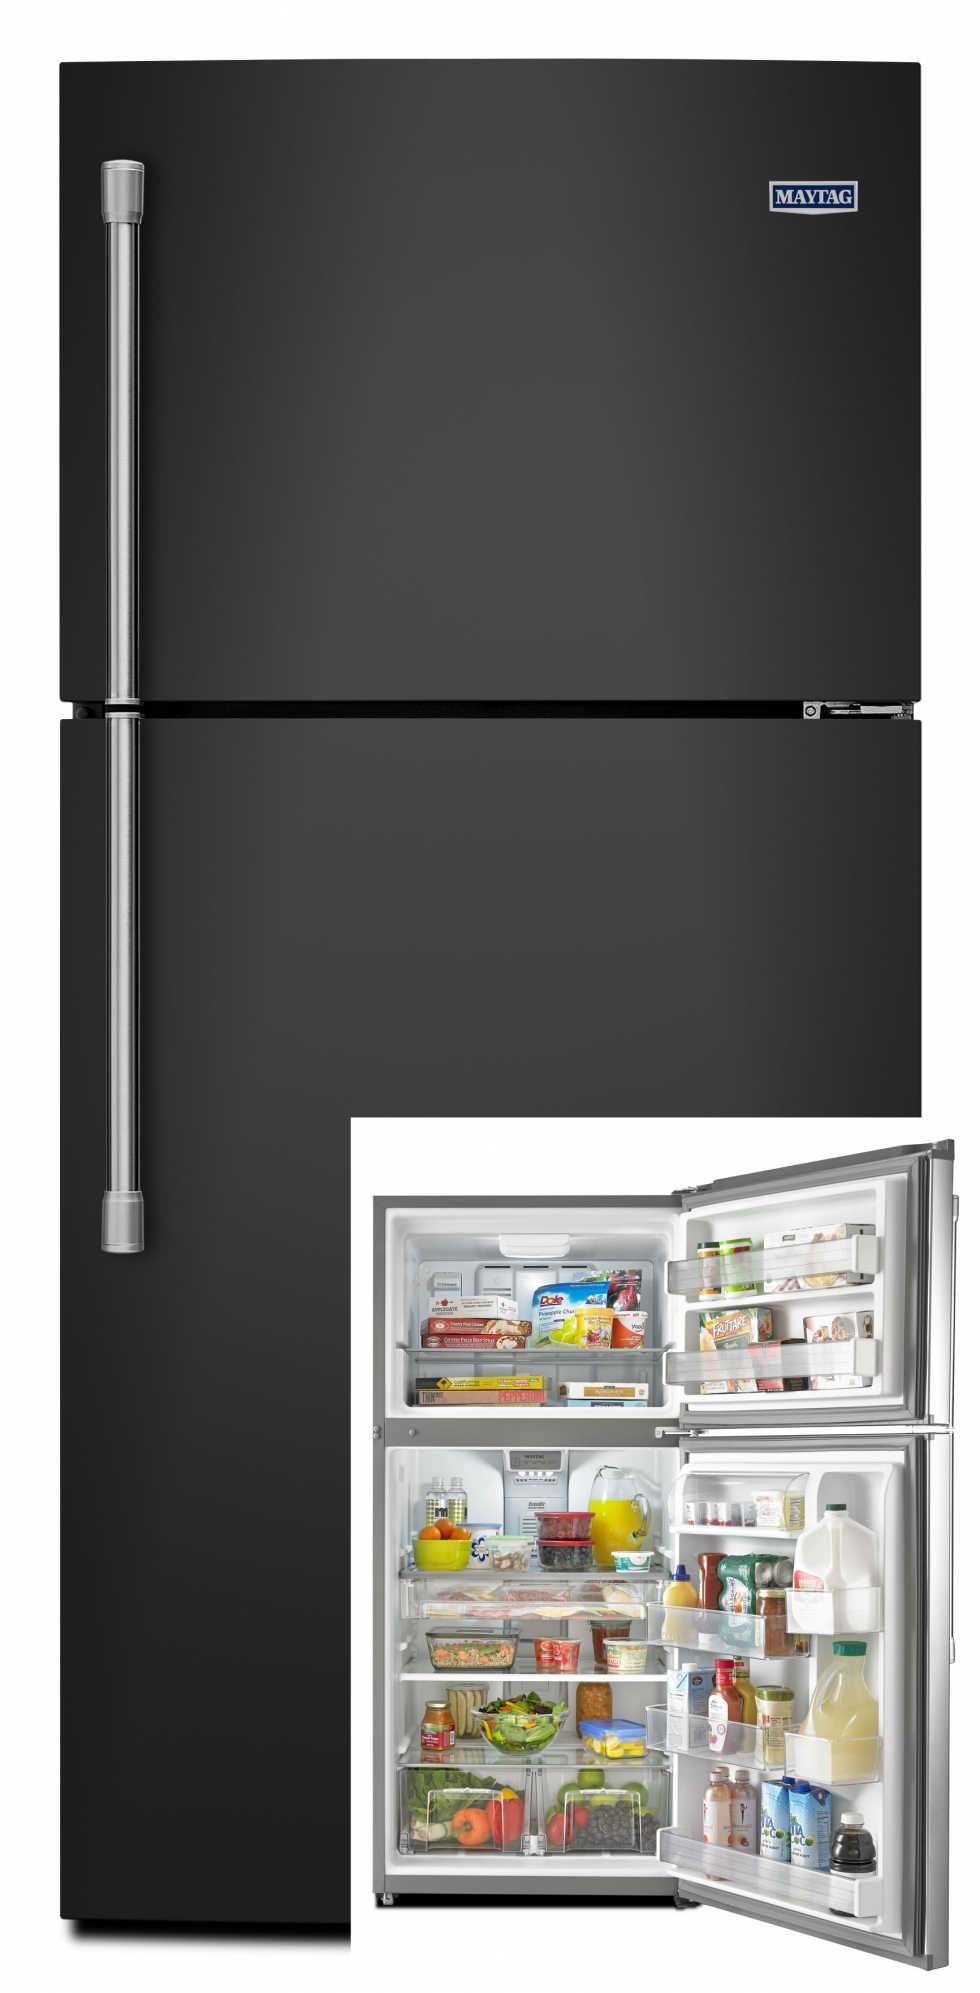 Maytag Top-Freezer Refrigerator Black